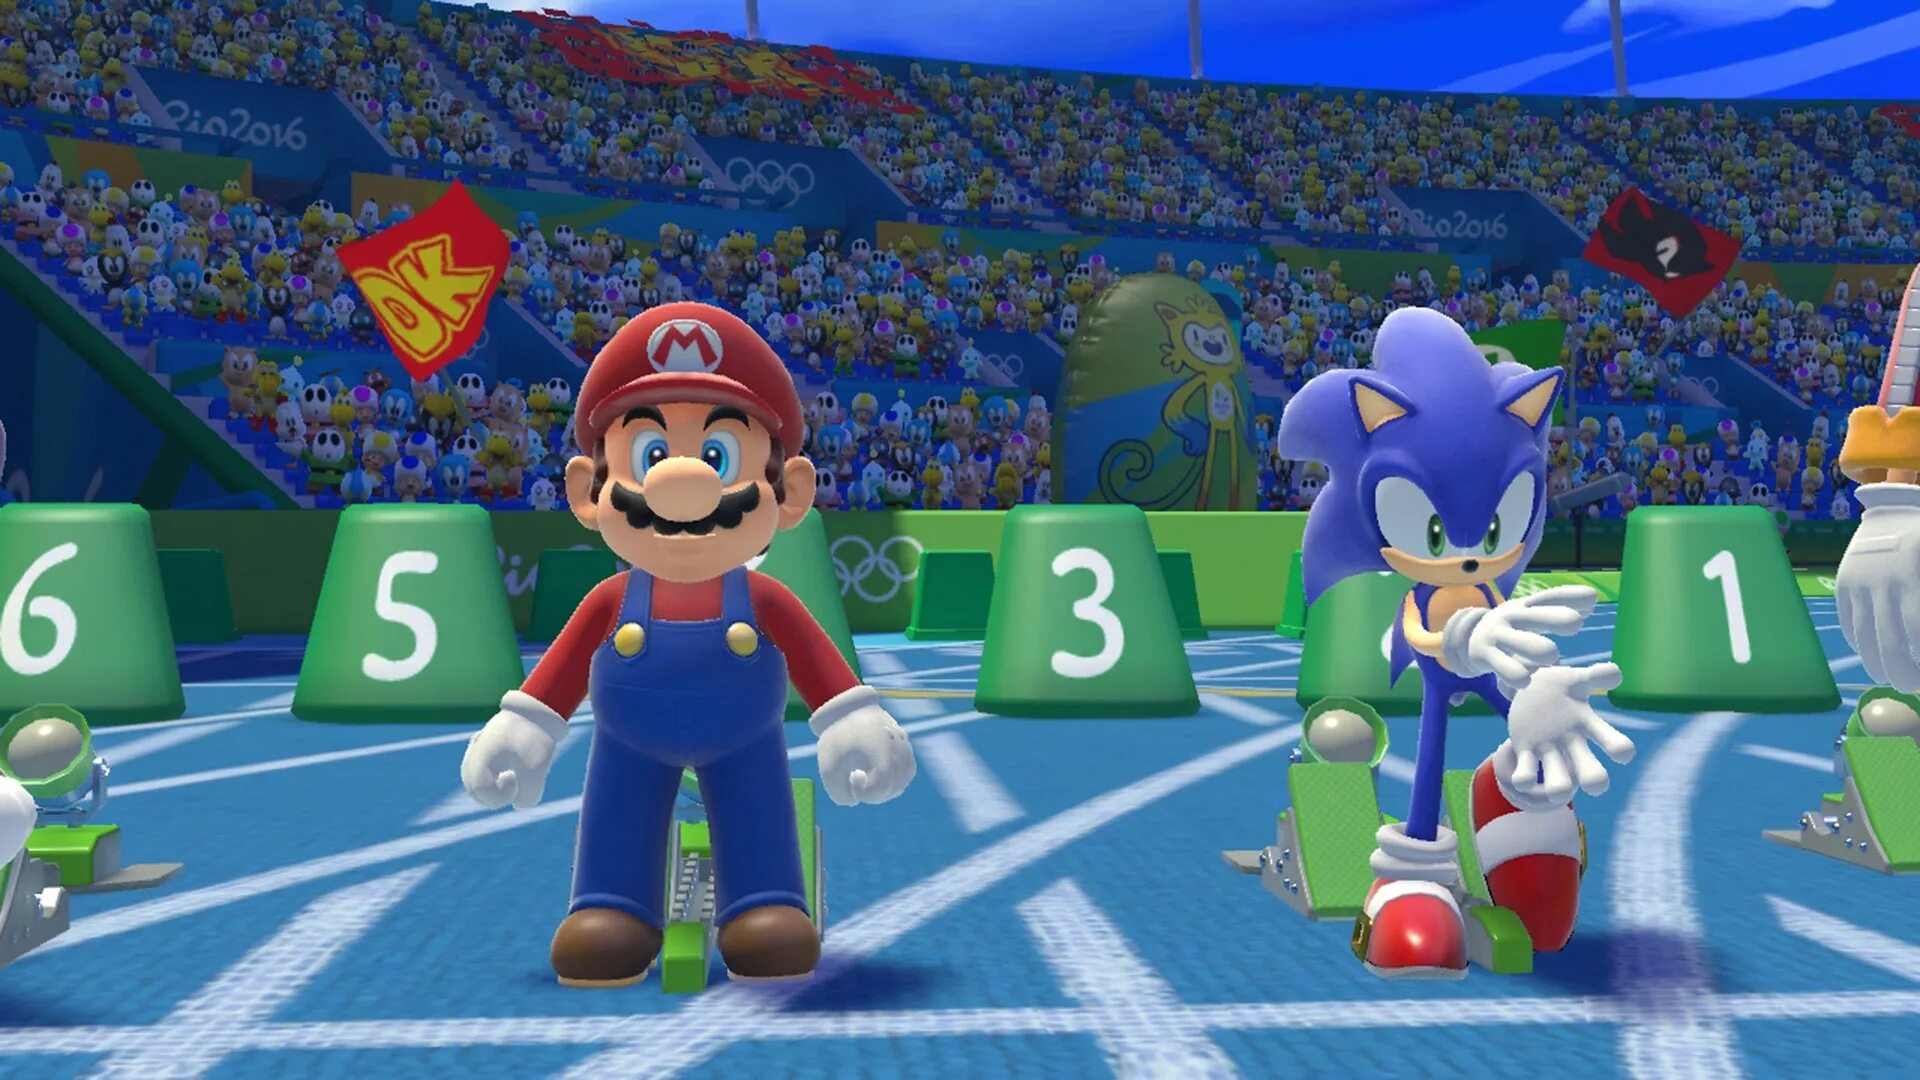 Олимпийский марио и соник. Mario & Sonic at the Olympic games. Mario & Sonic at the Rio 2016 Olympic games. Марио и Соник на Олимпийских играх 2016. Марио и Соник на Олимпийских играх 2016 в Рио.